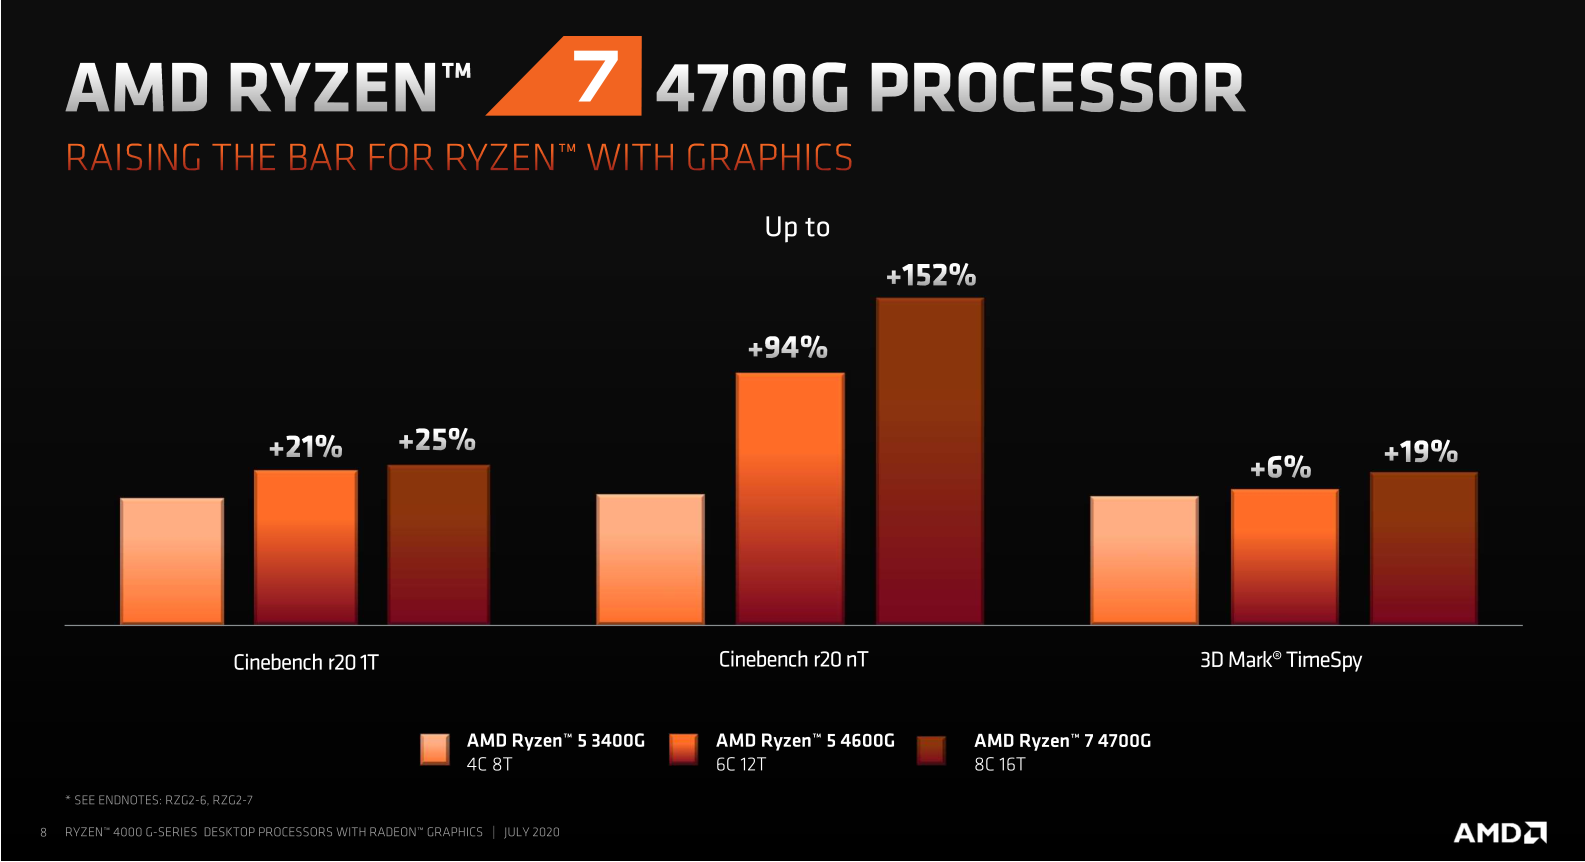 1197830 amd ryzen 4000g vykon igpu original AMD RYZEN 7 PRO 4750G PROCESSOR REVIEW